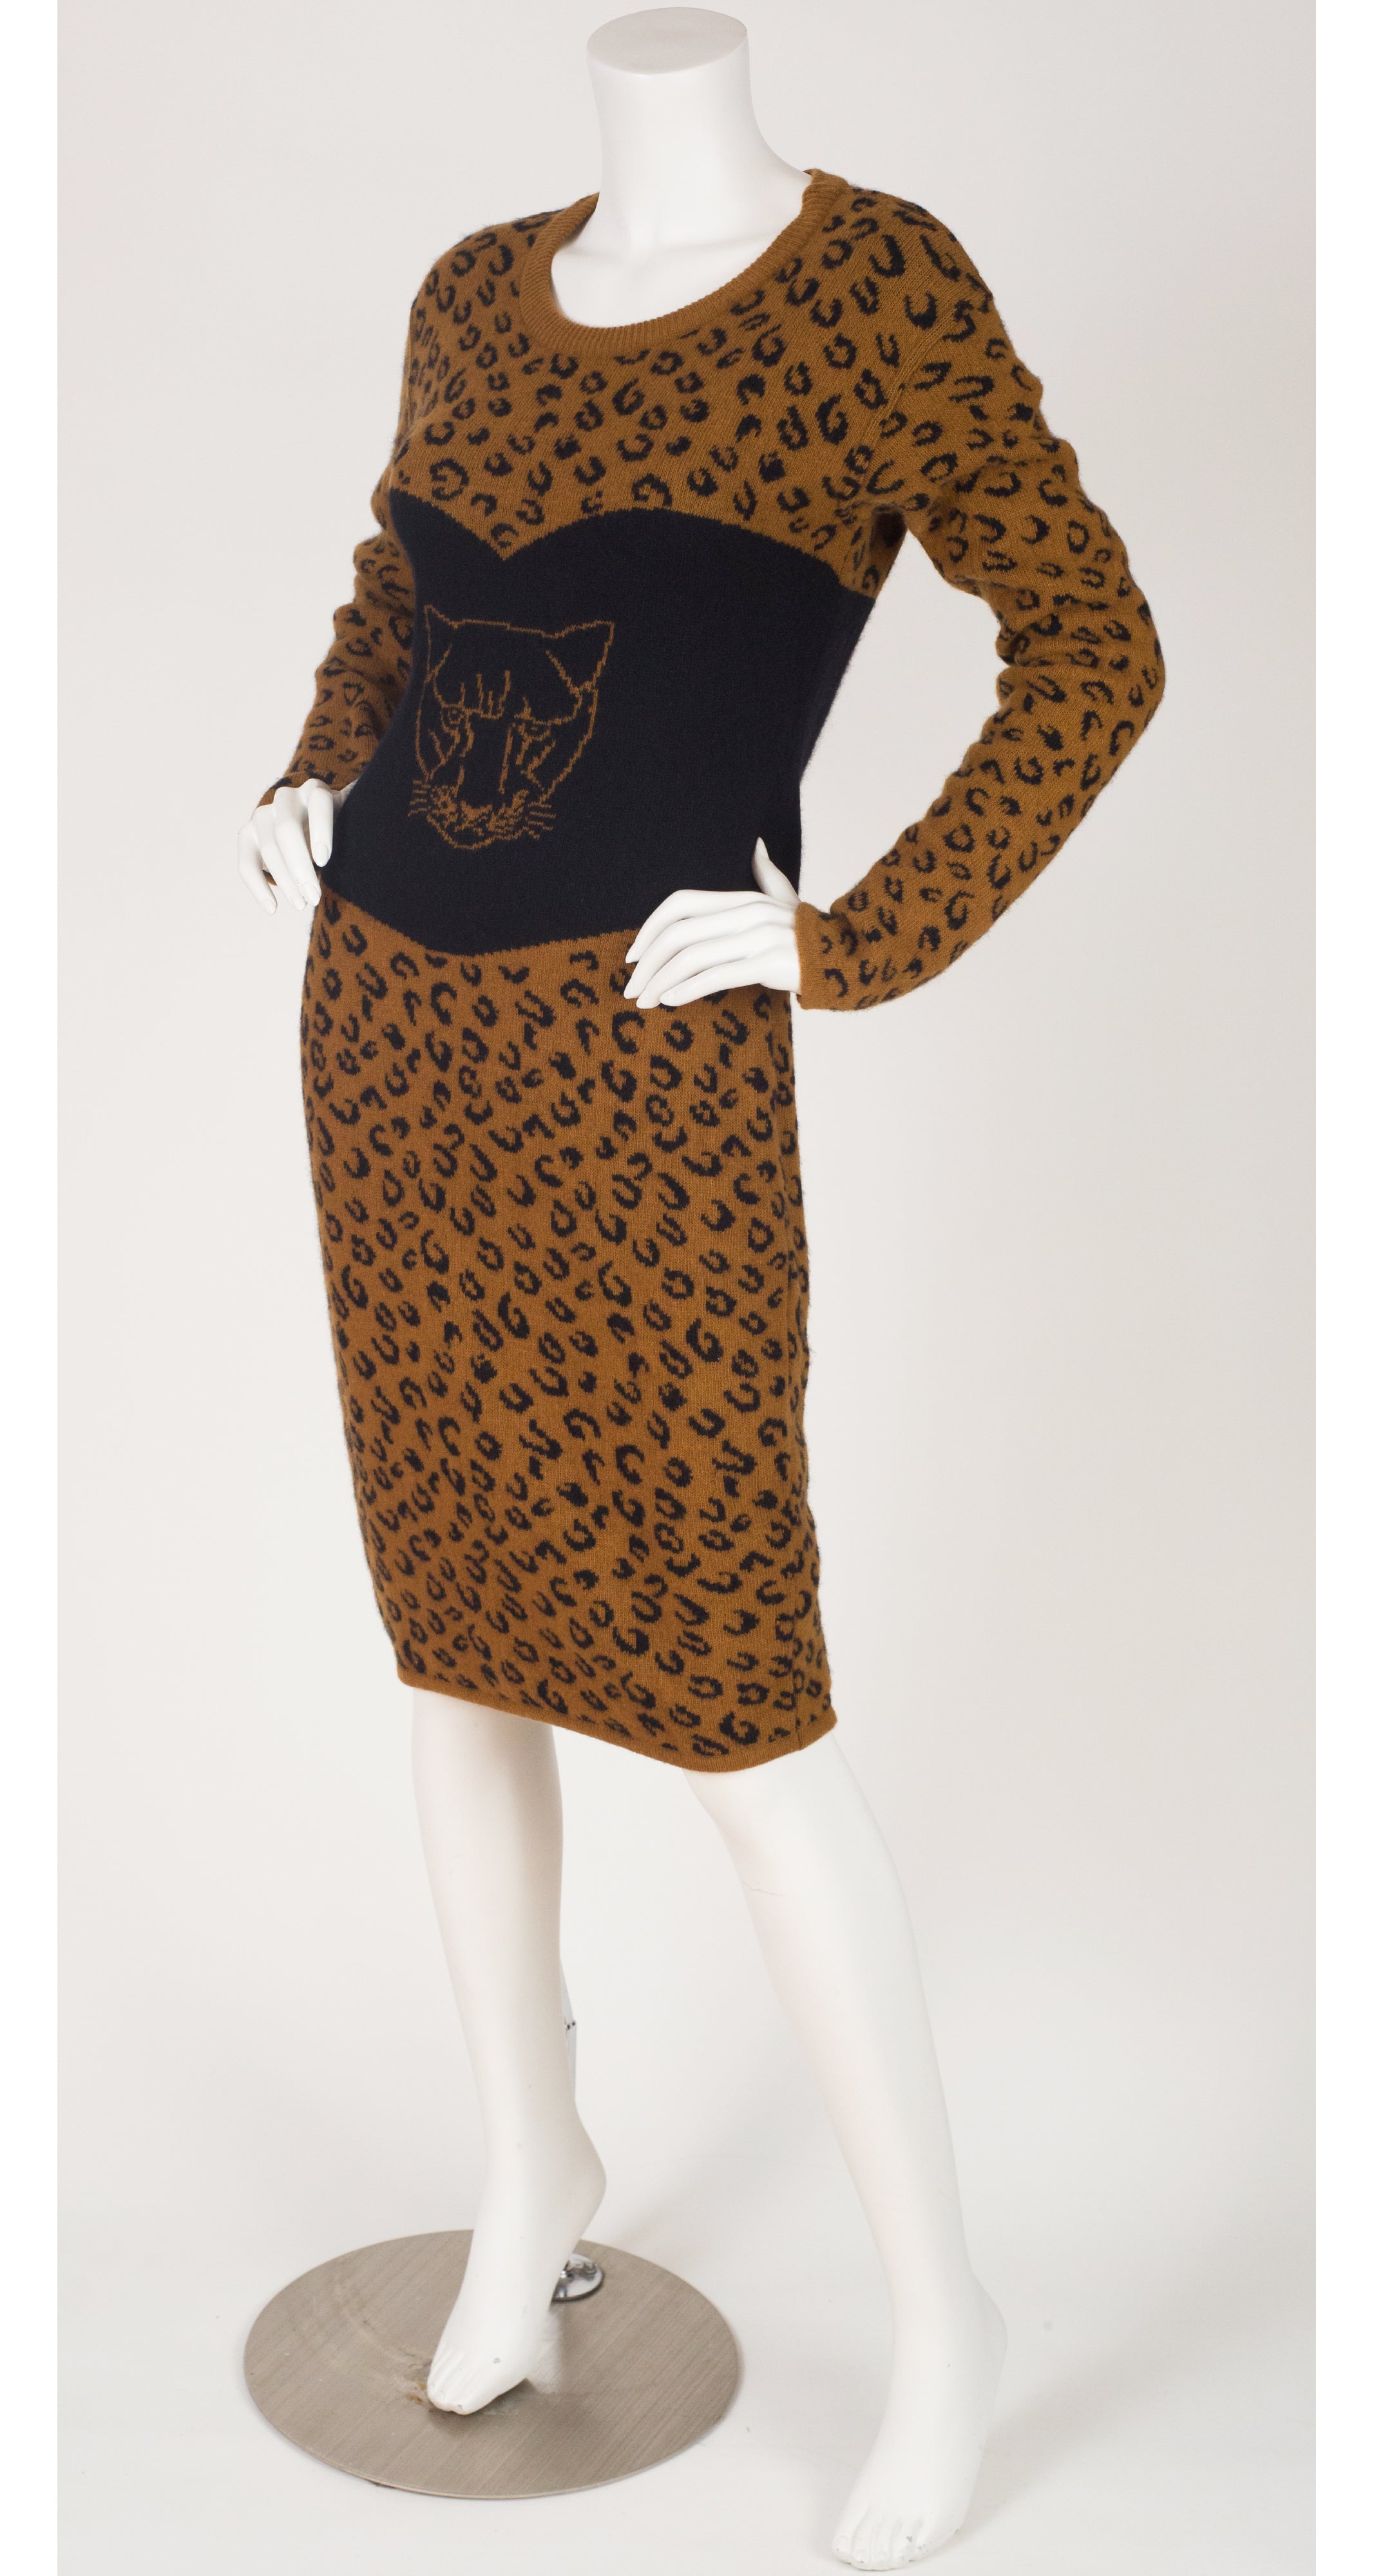 1980s Leopard Print Angora Sweater Dress